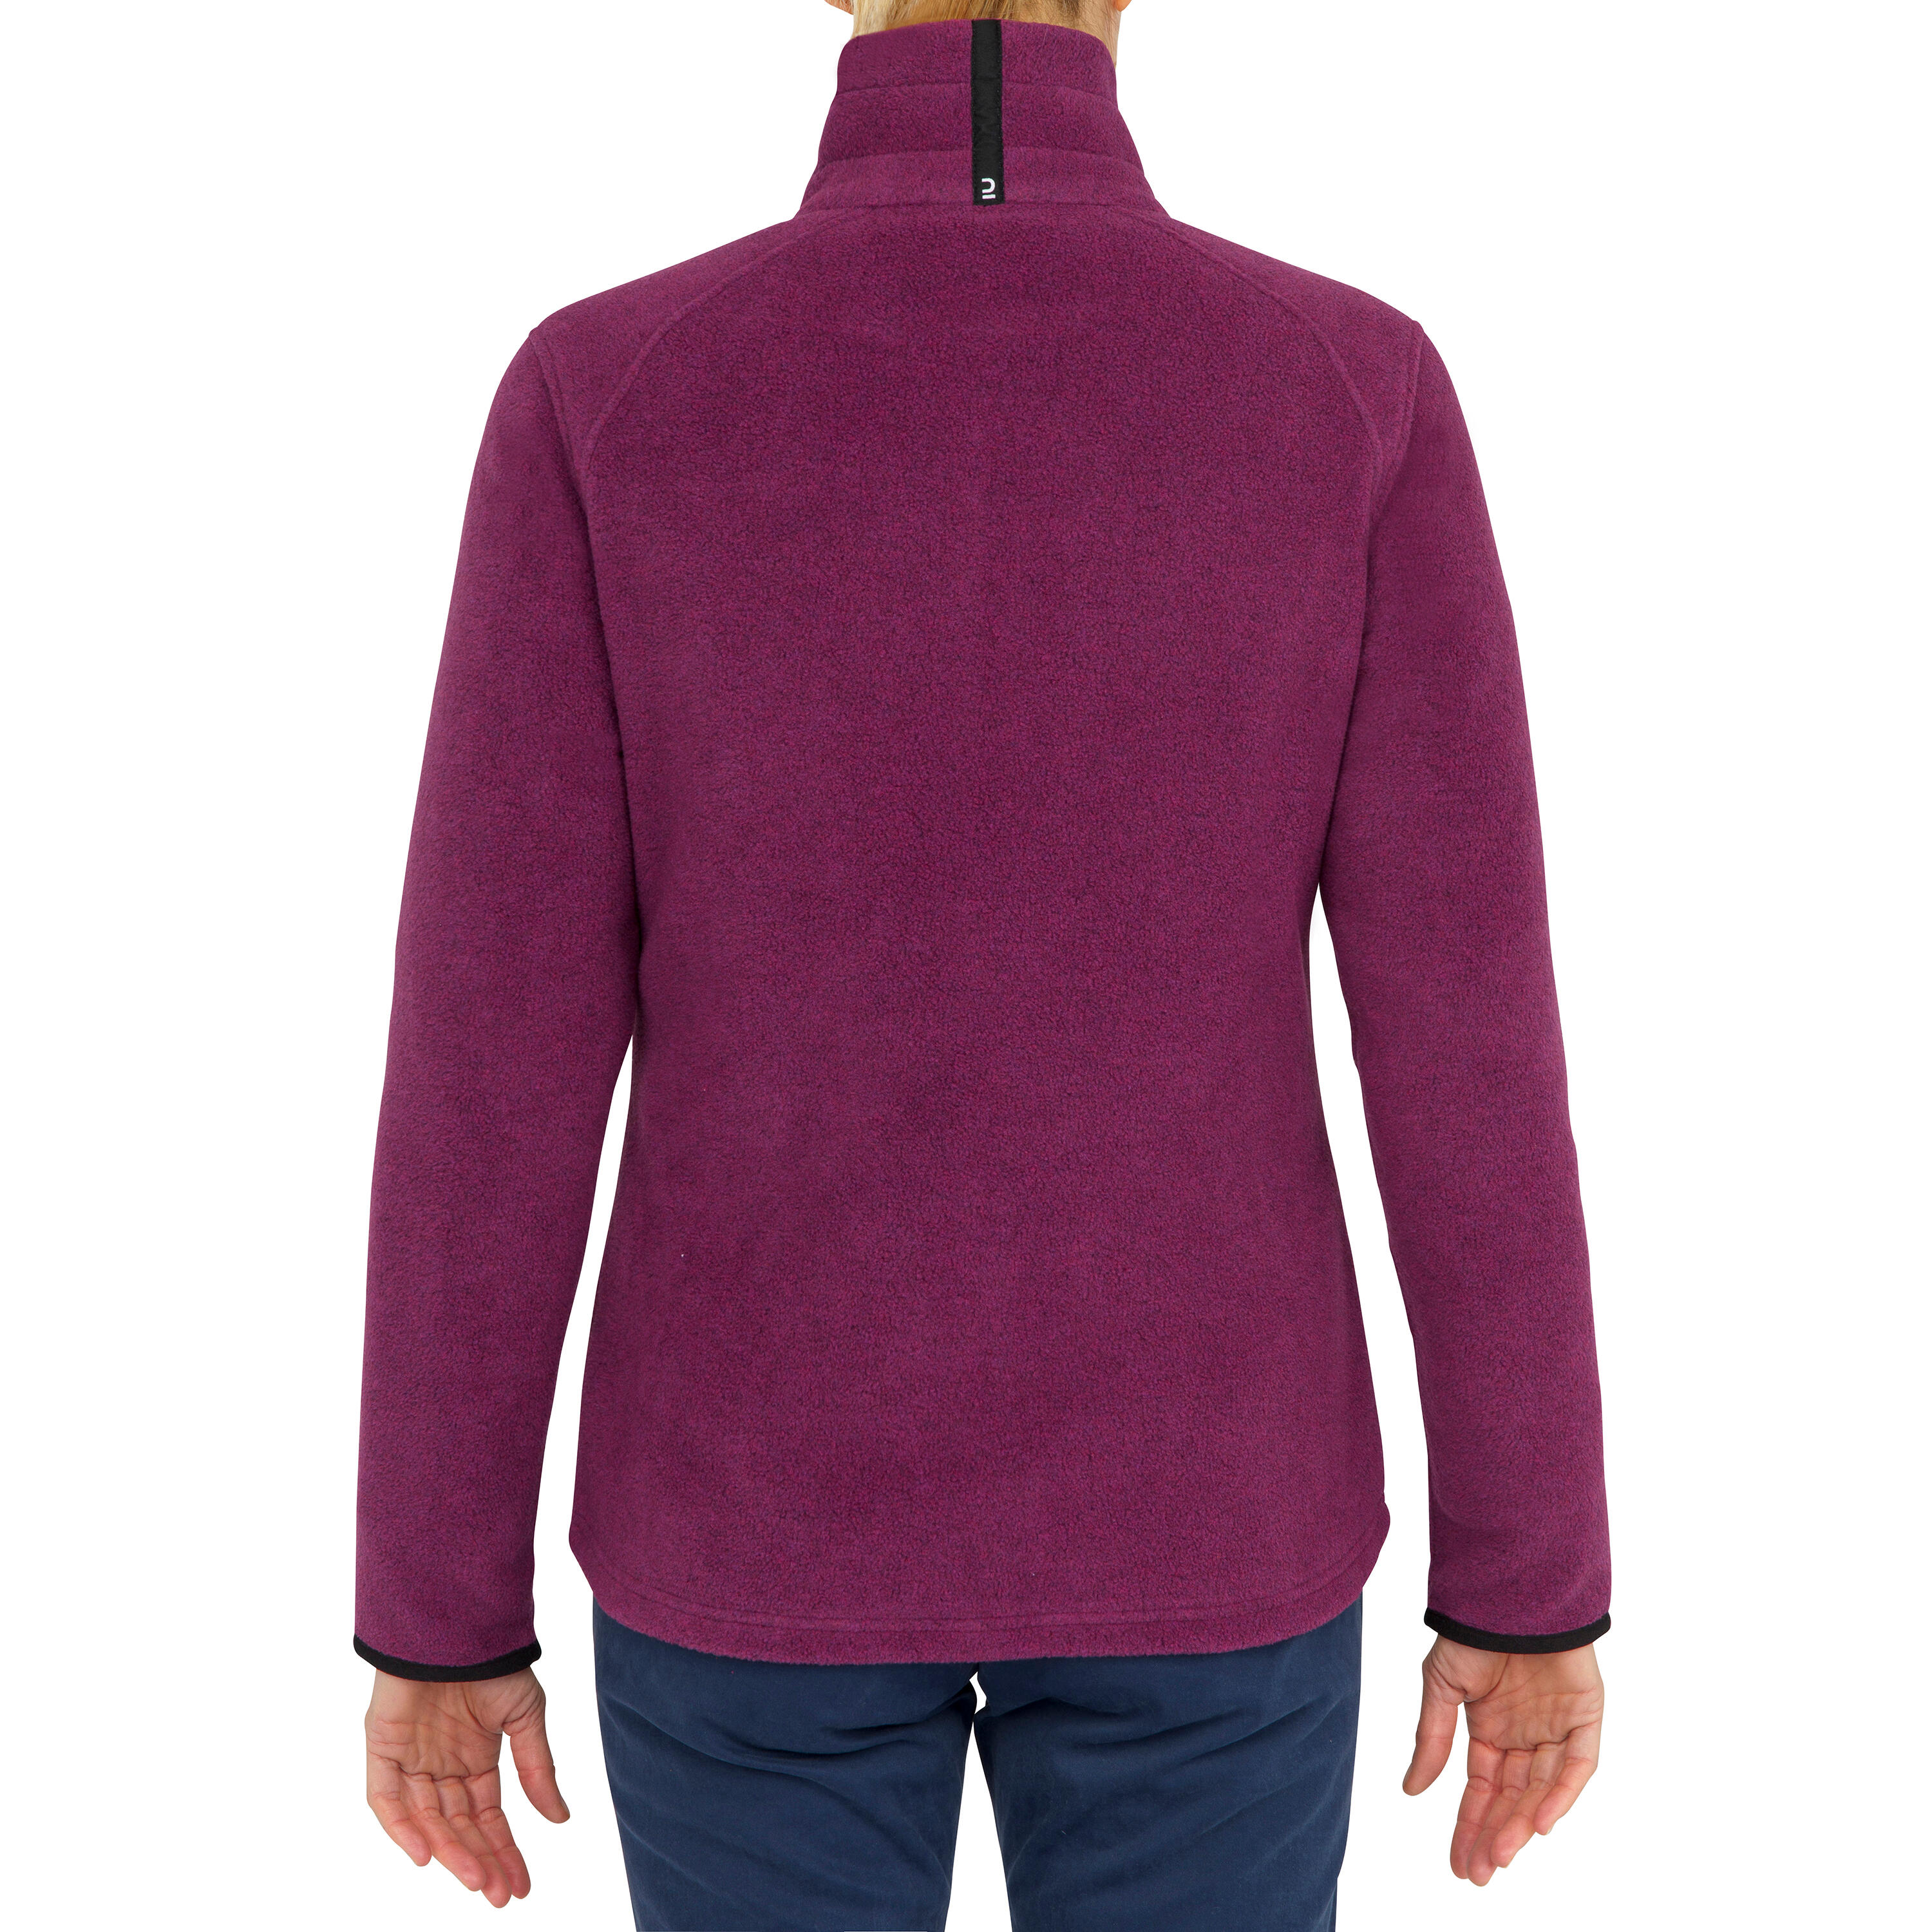 Women warm fleece sailing jacket 100 - Mottled dark Violet 5/10